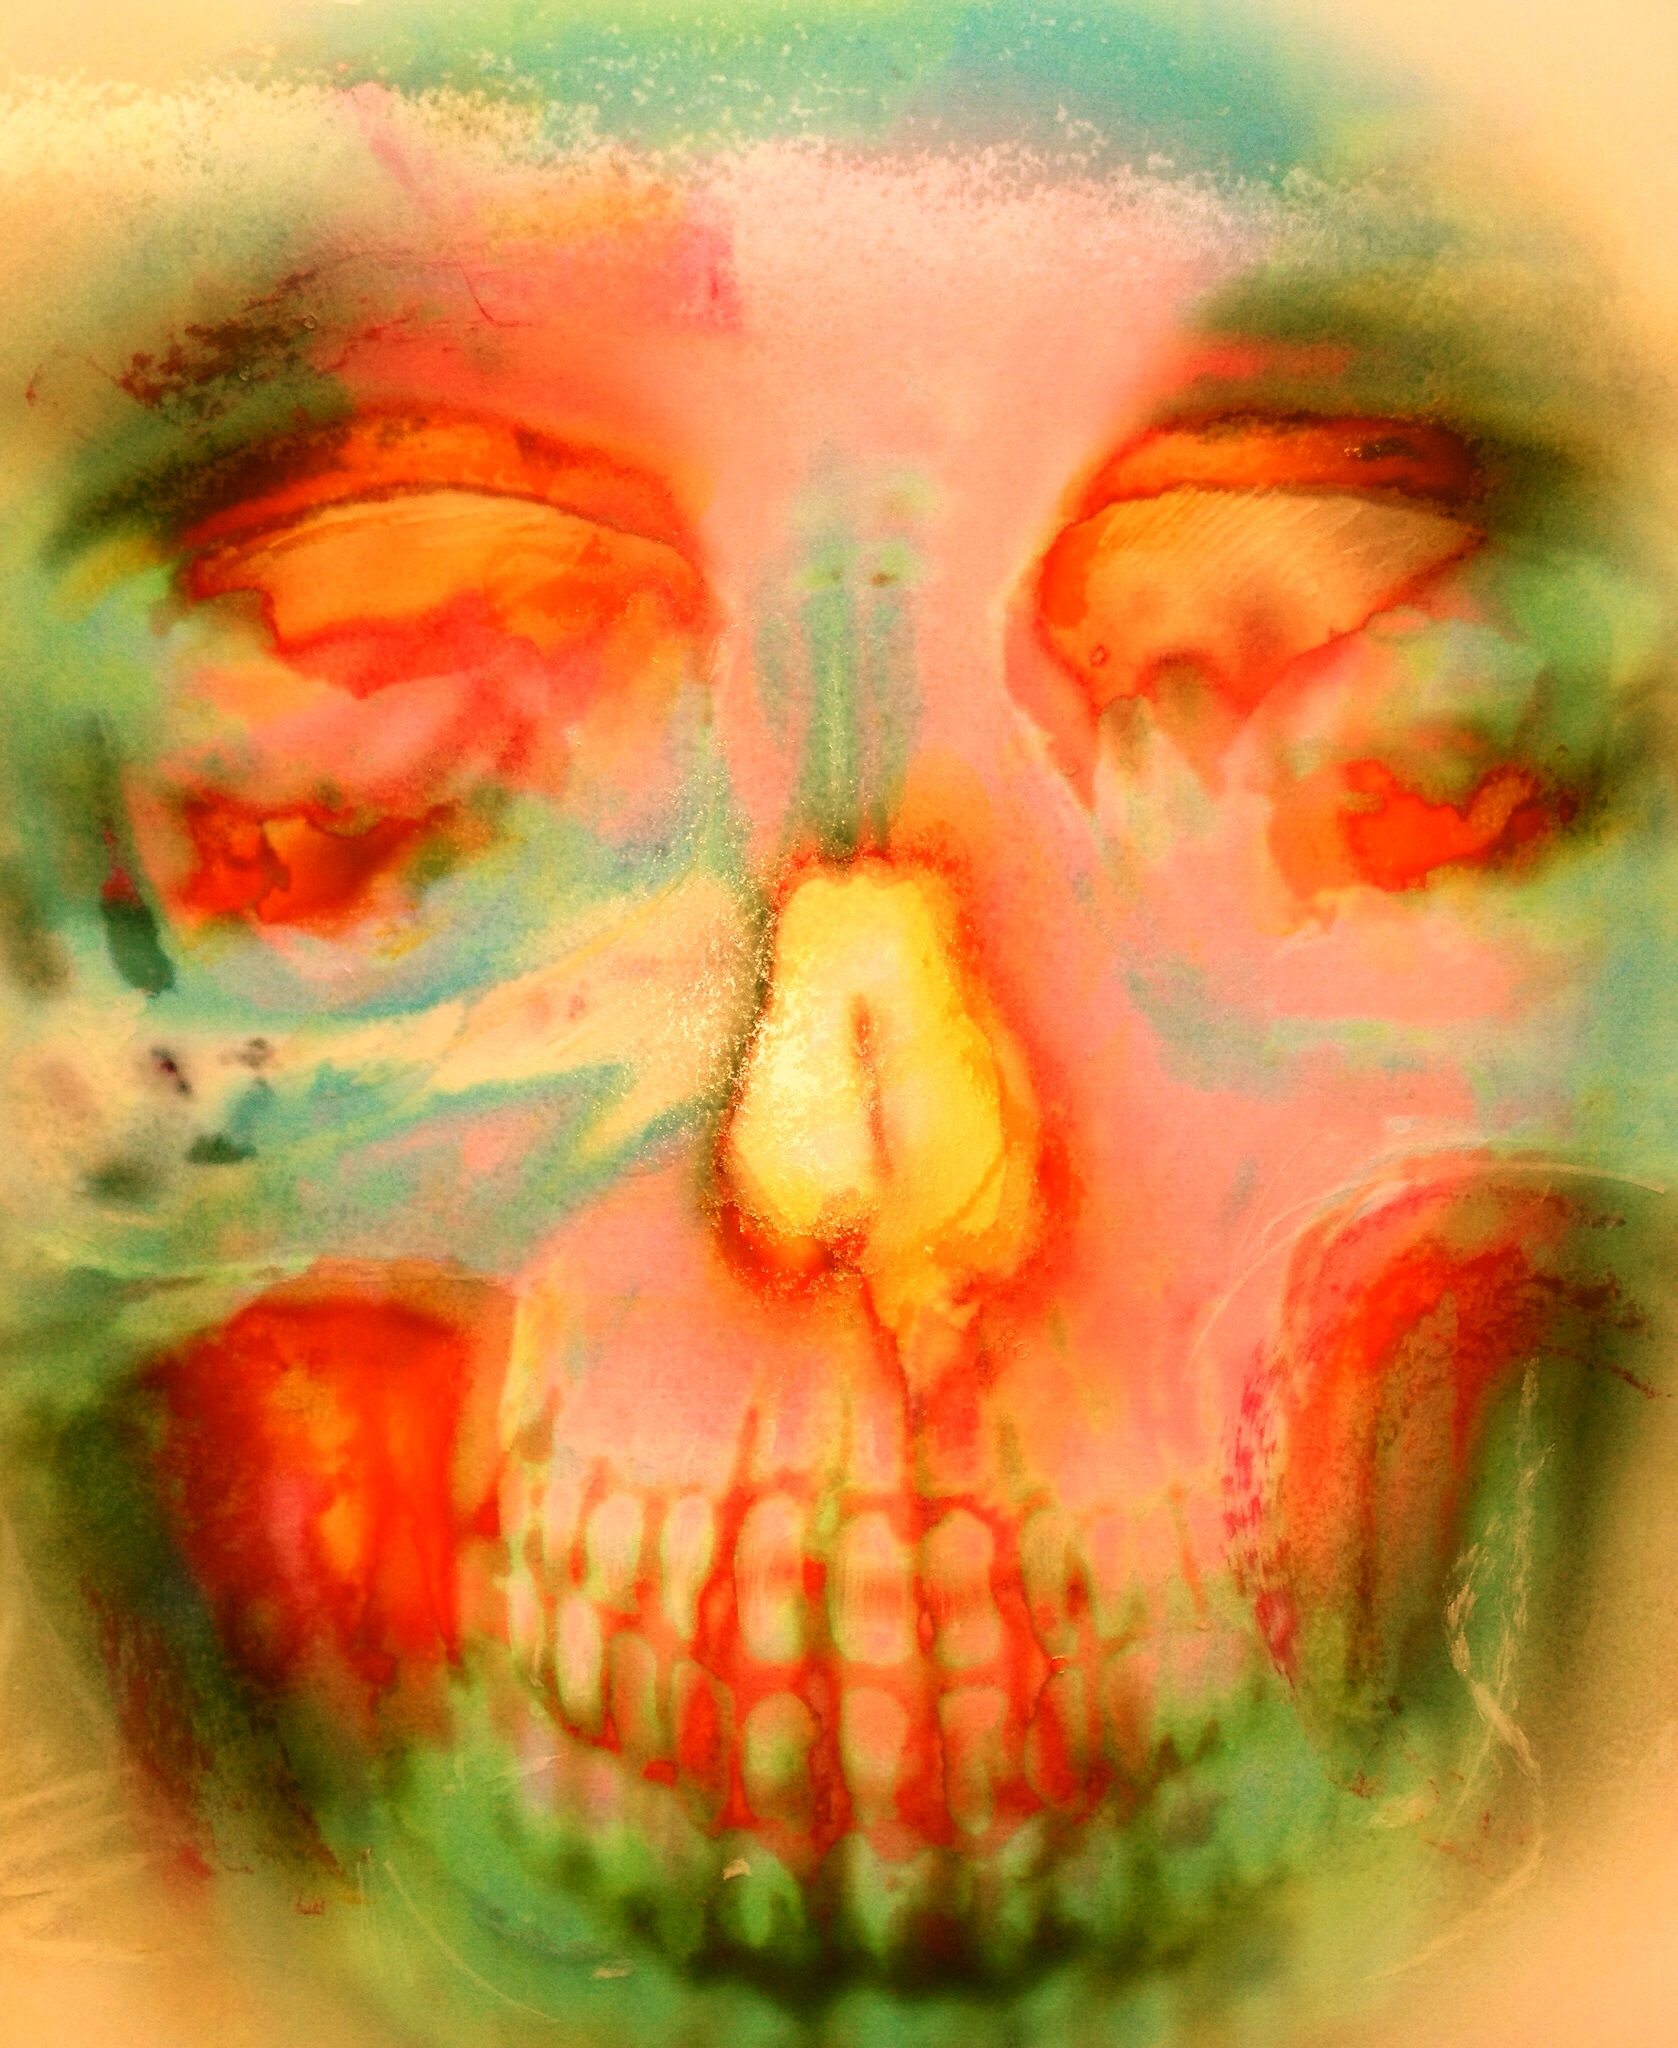 "awoken skull" by Eric Hawkey